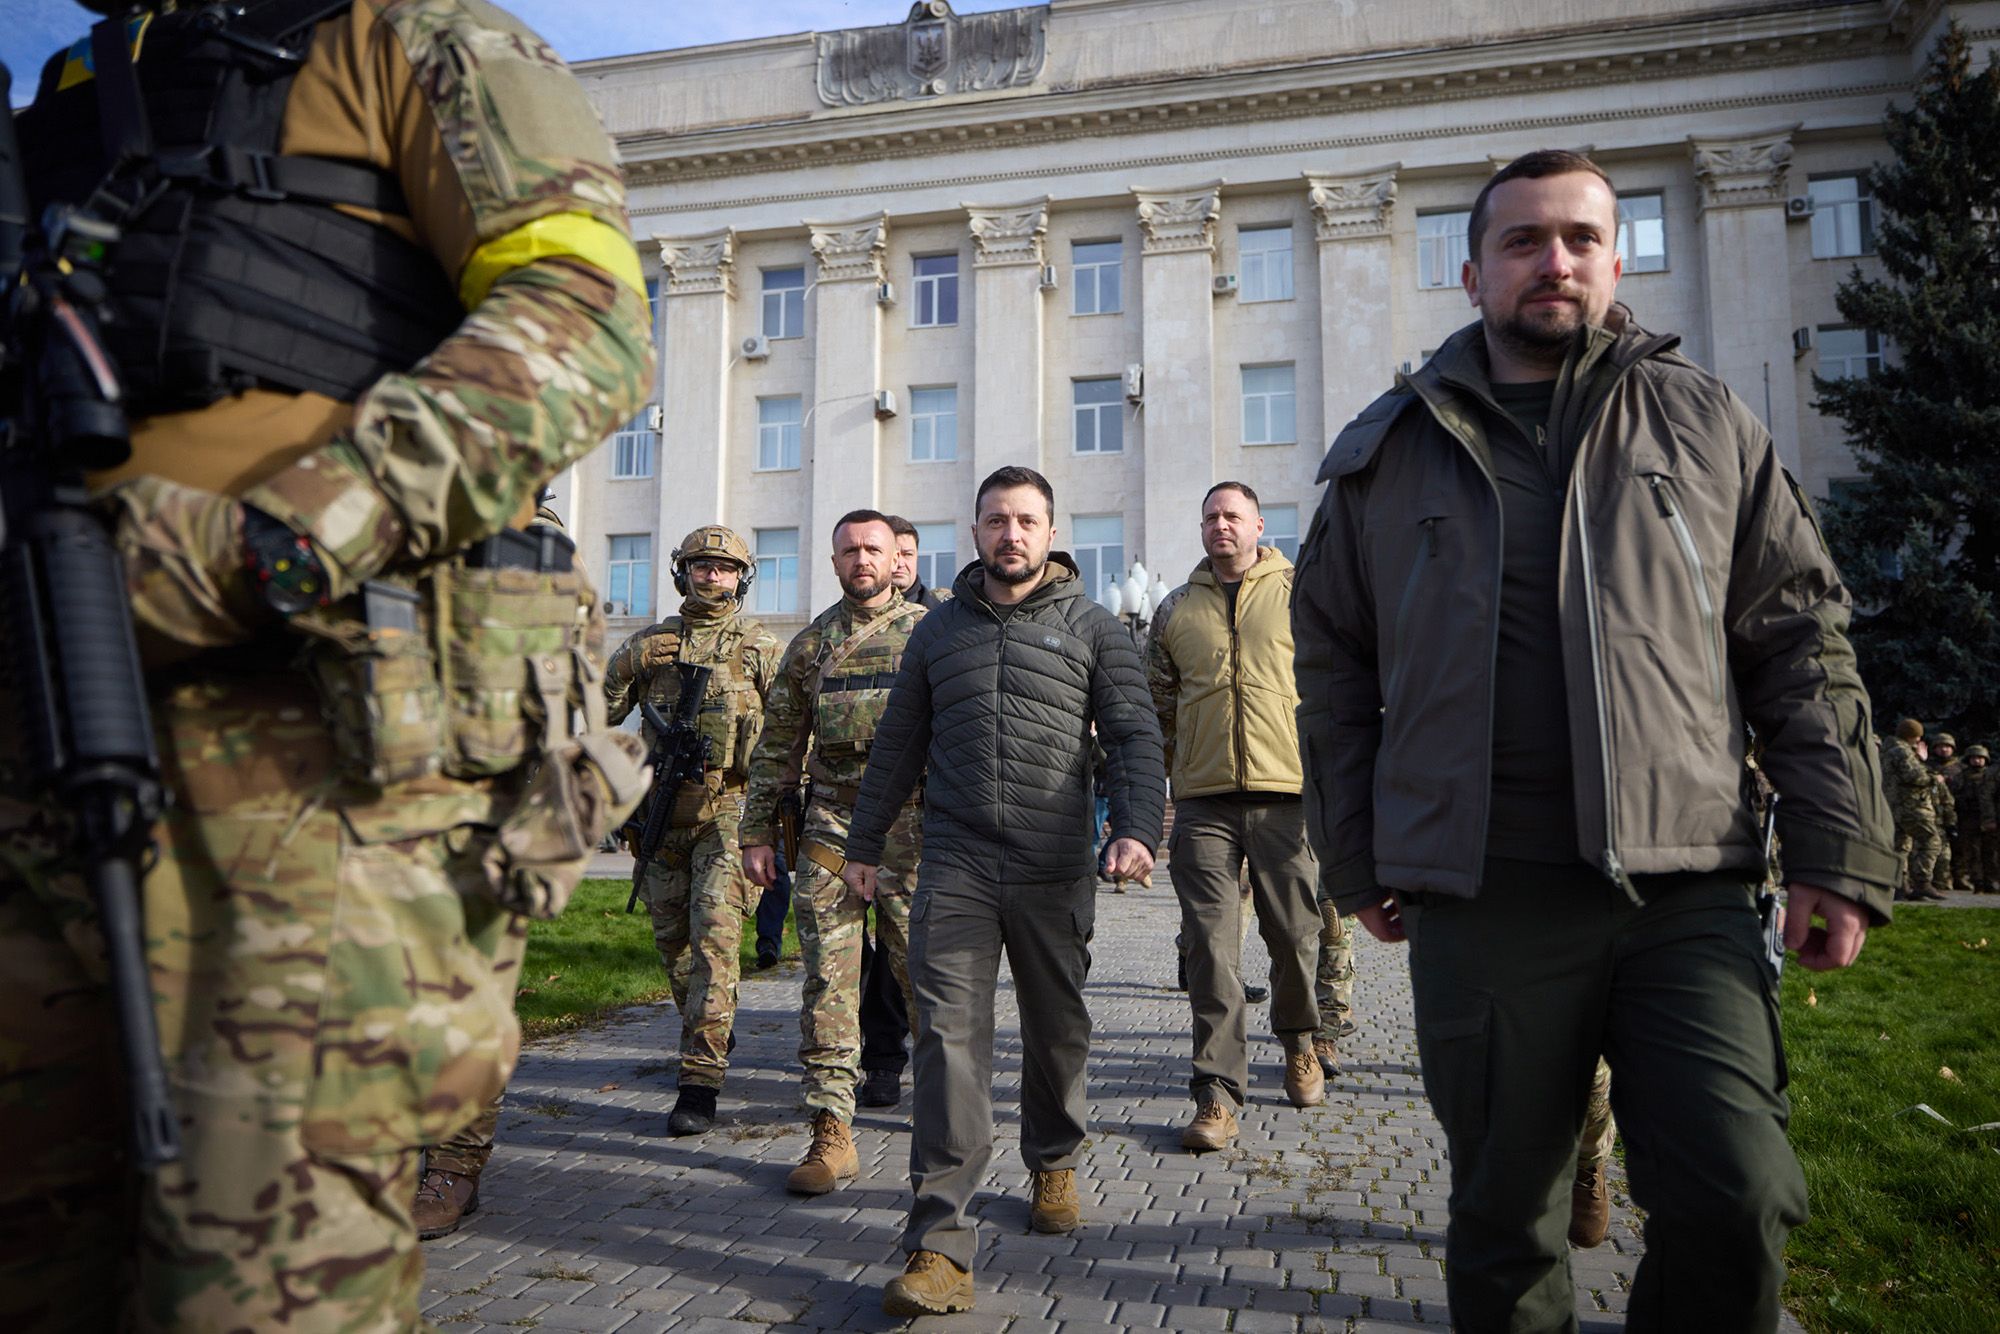 Kherson: Zelensky visits reclaimed city, accuses Russia of war crimes | CNN